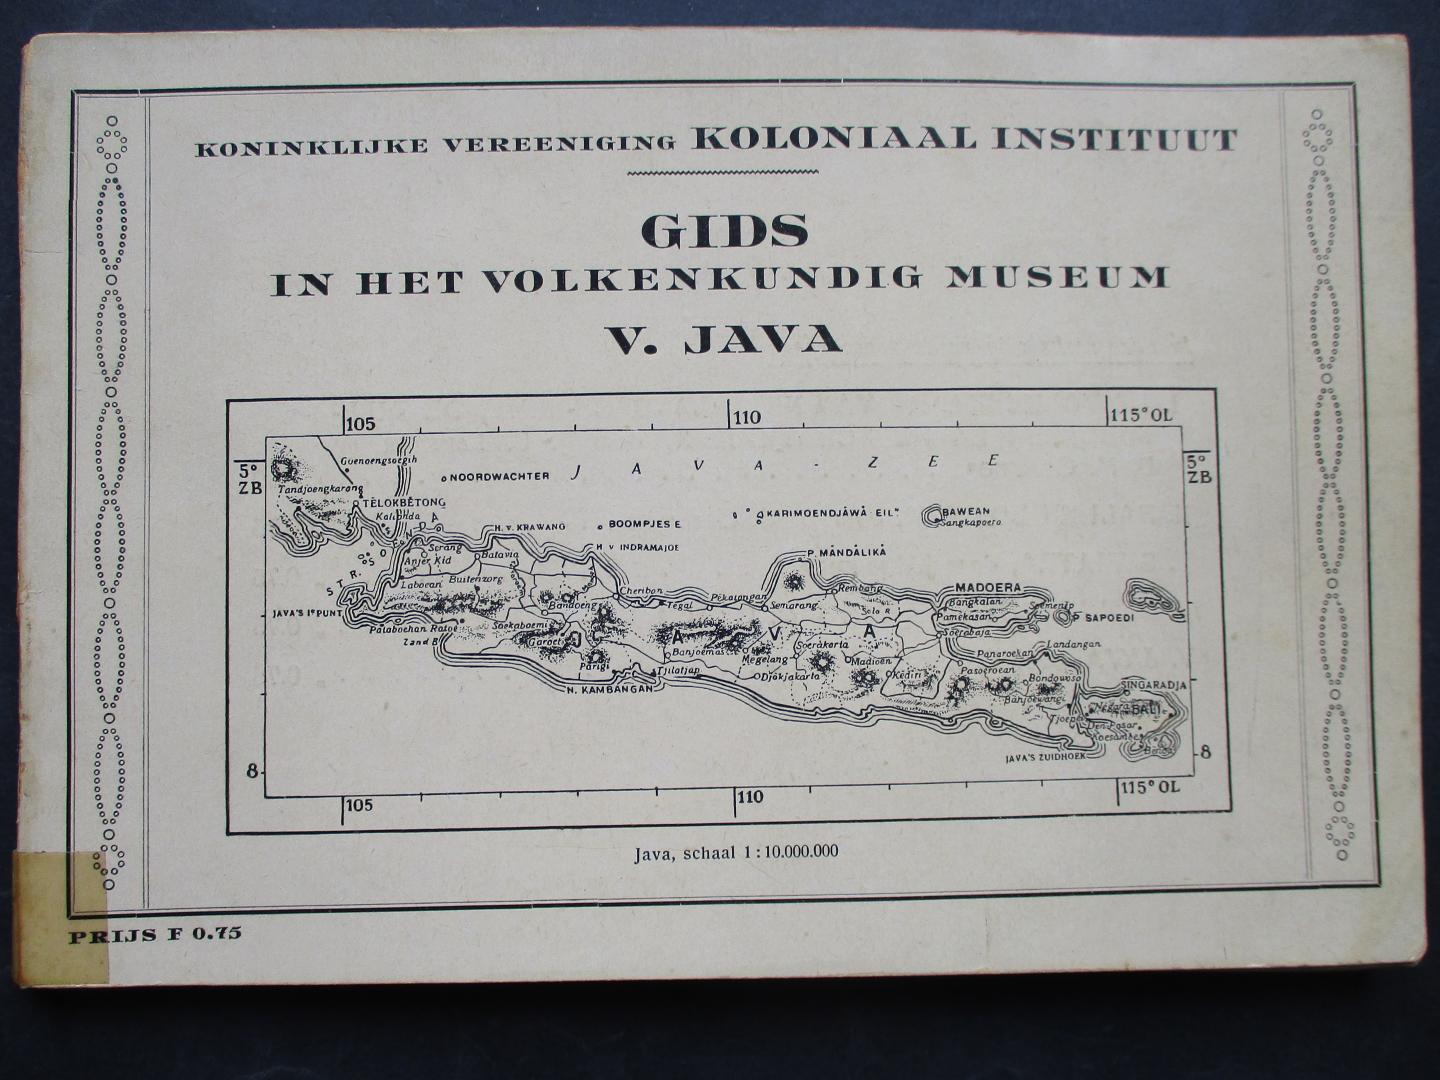 GOSLINGS, B.M. - Gids in het Volkenkundig Museum.V: Java.